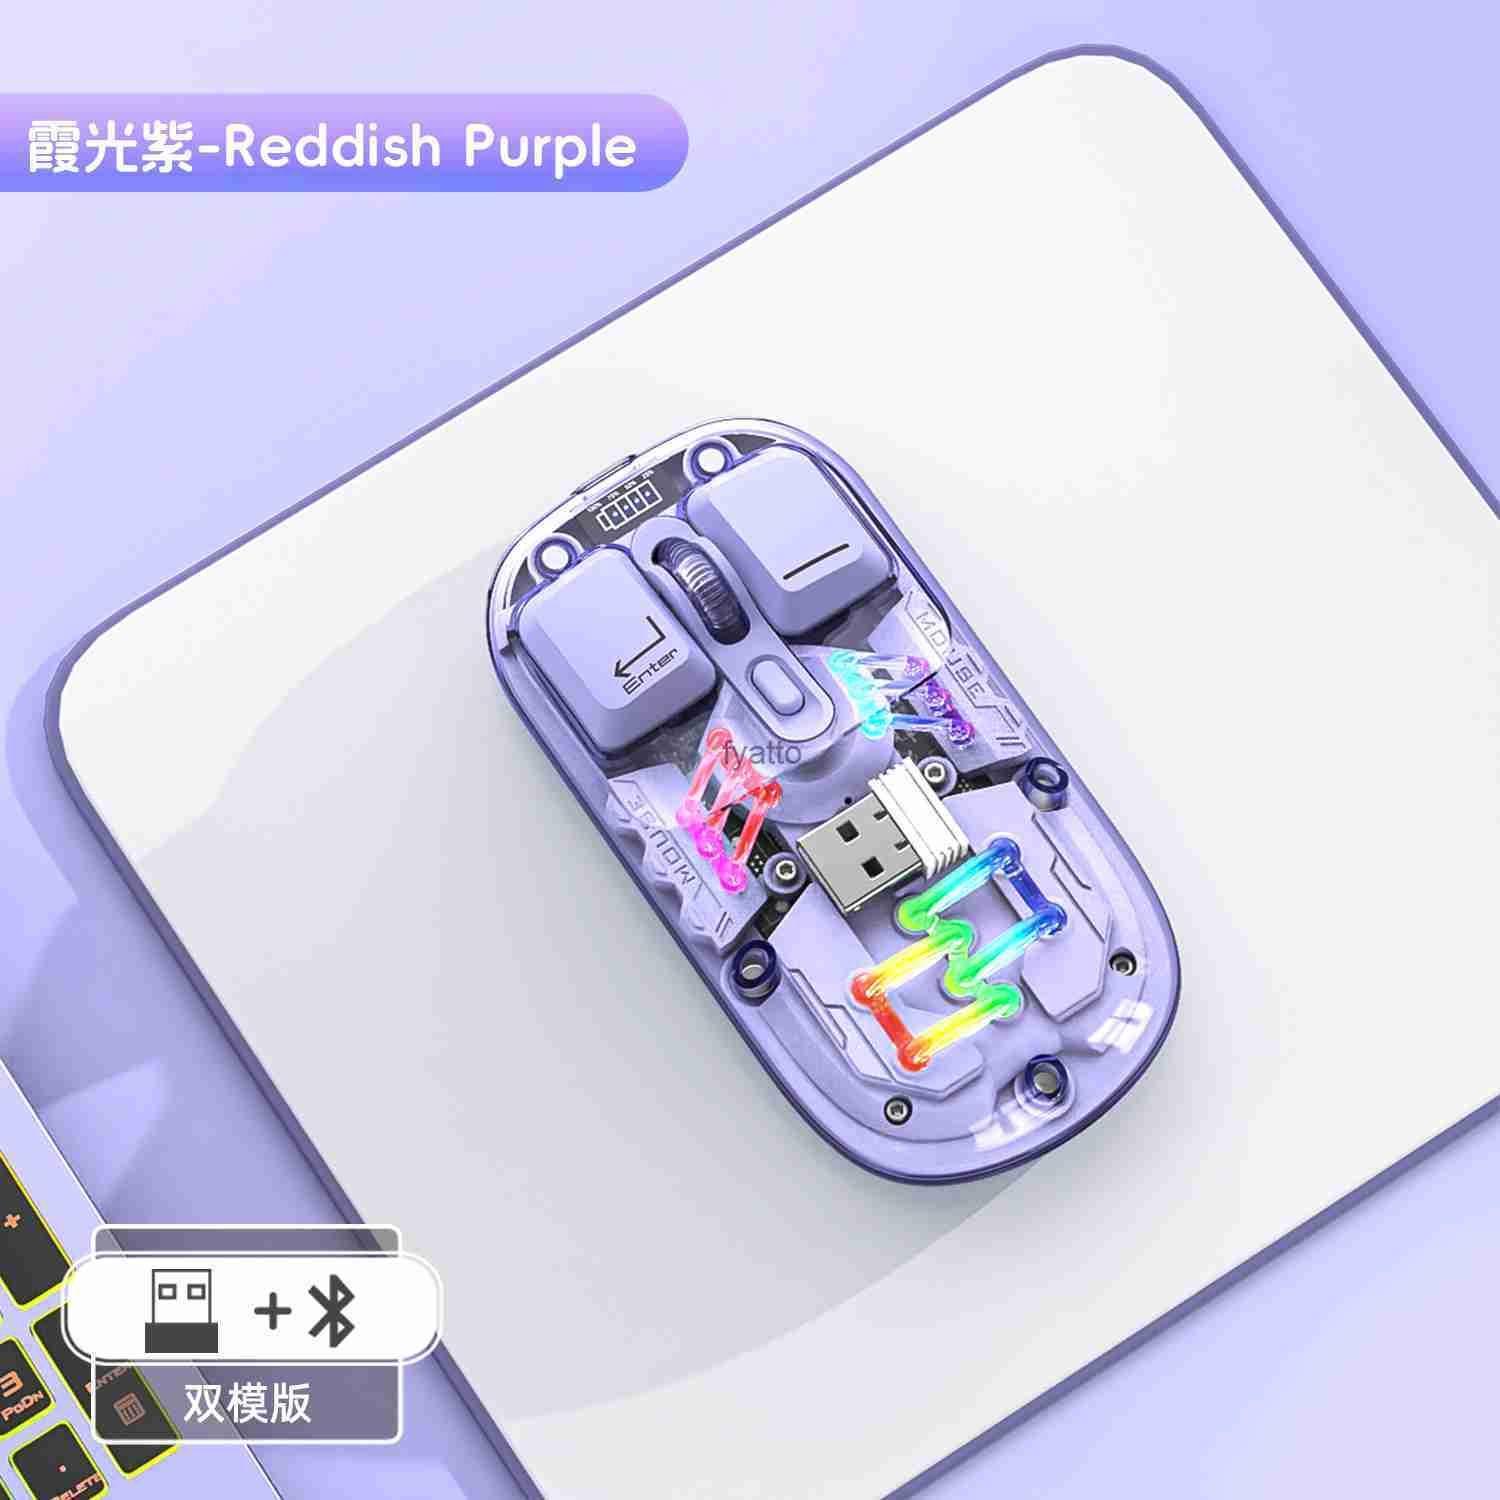 Xiaguang Purpleデュアルモード/2.4g+Bluetooth